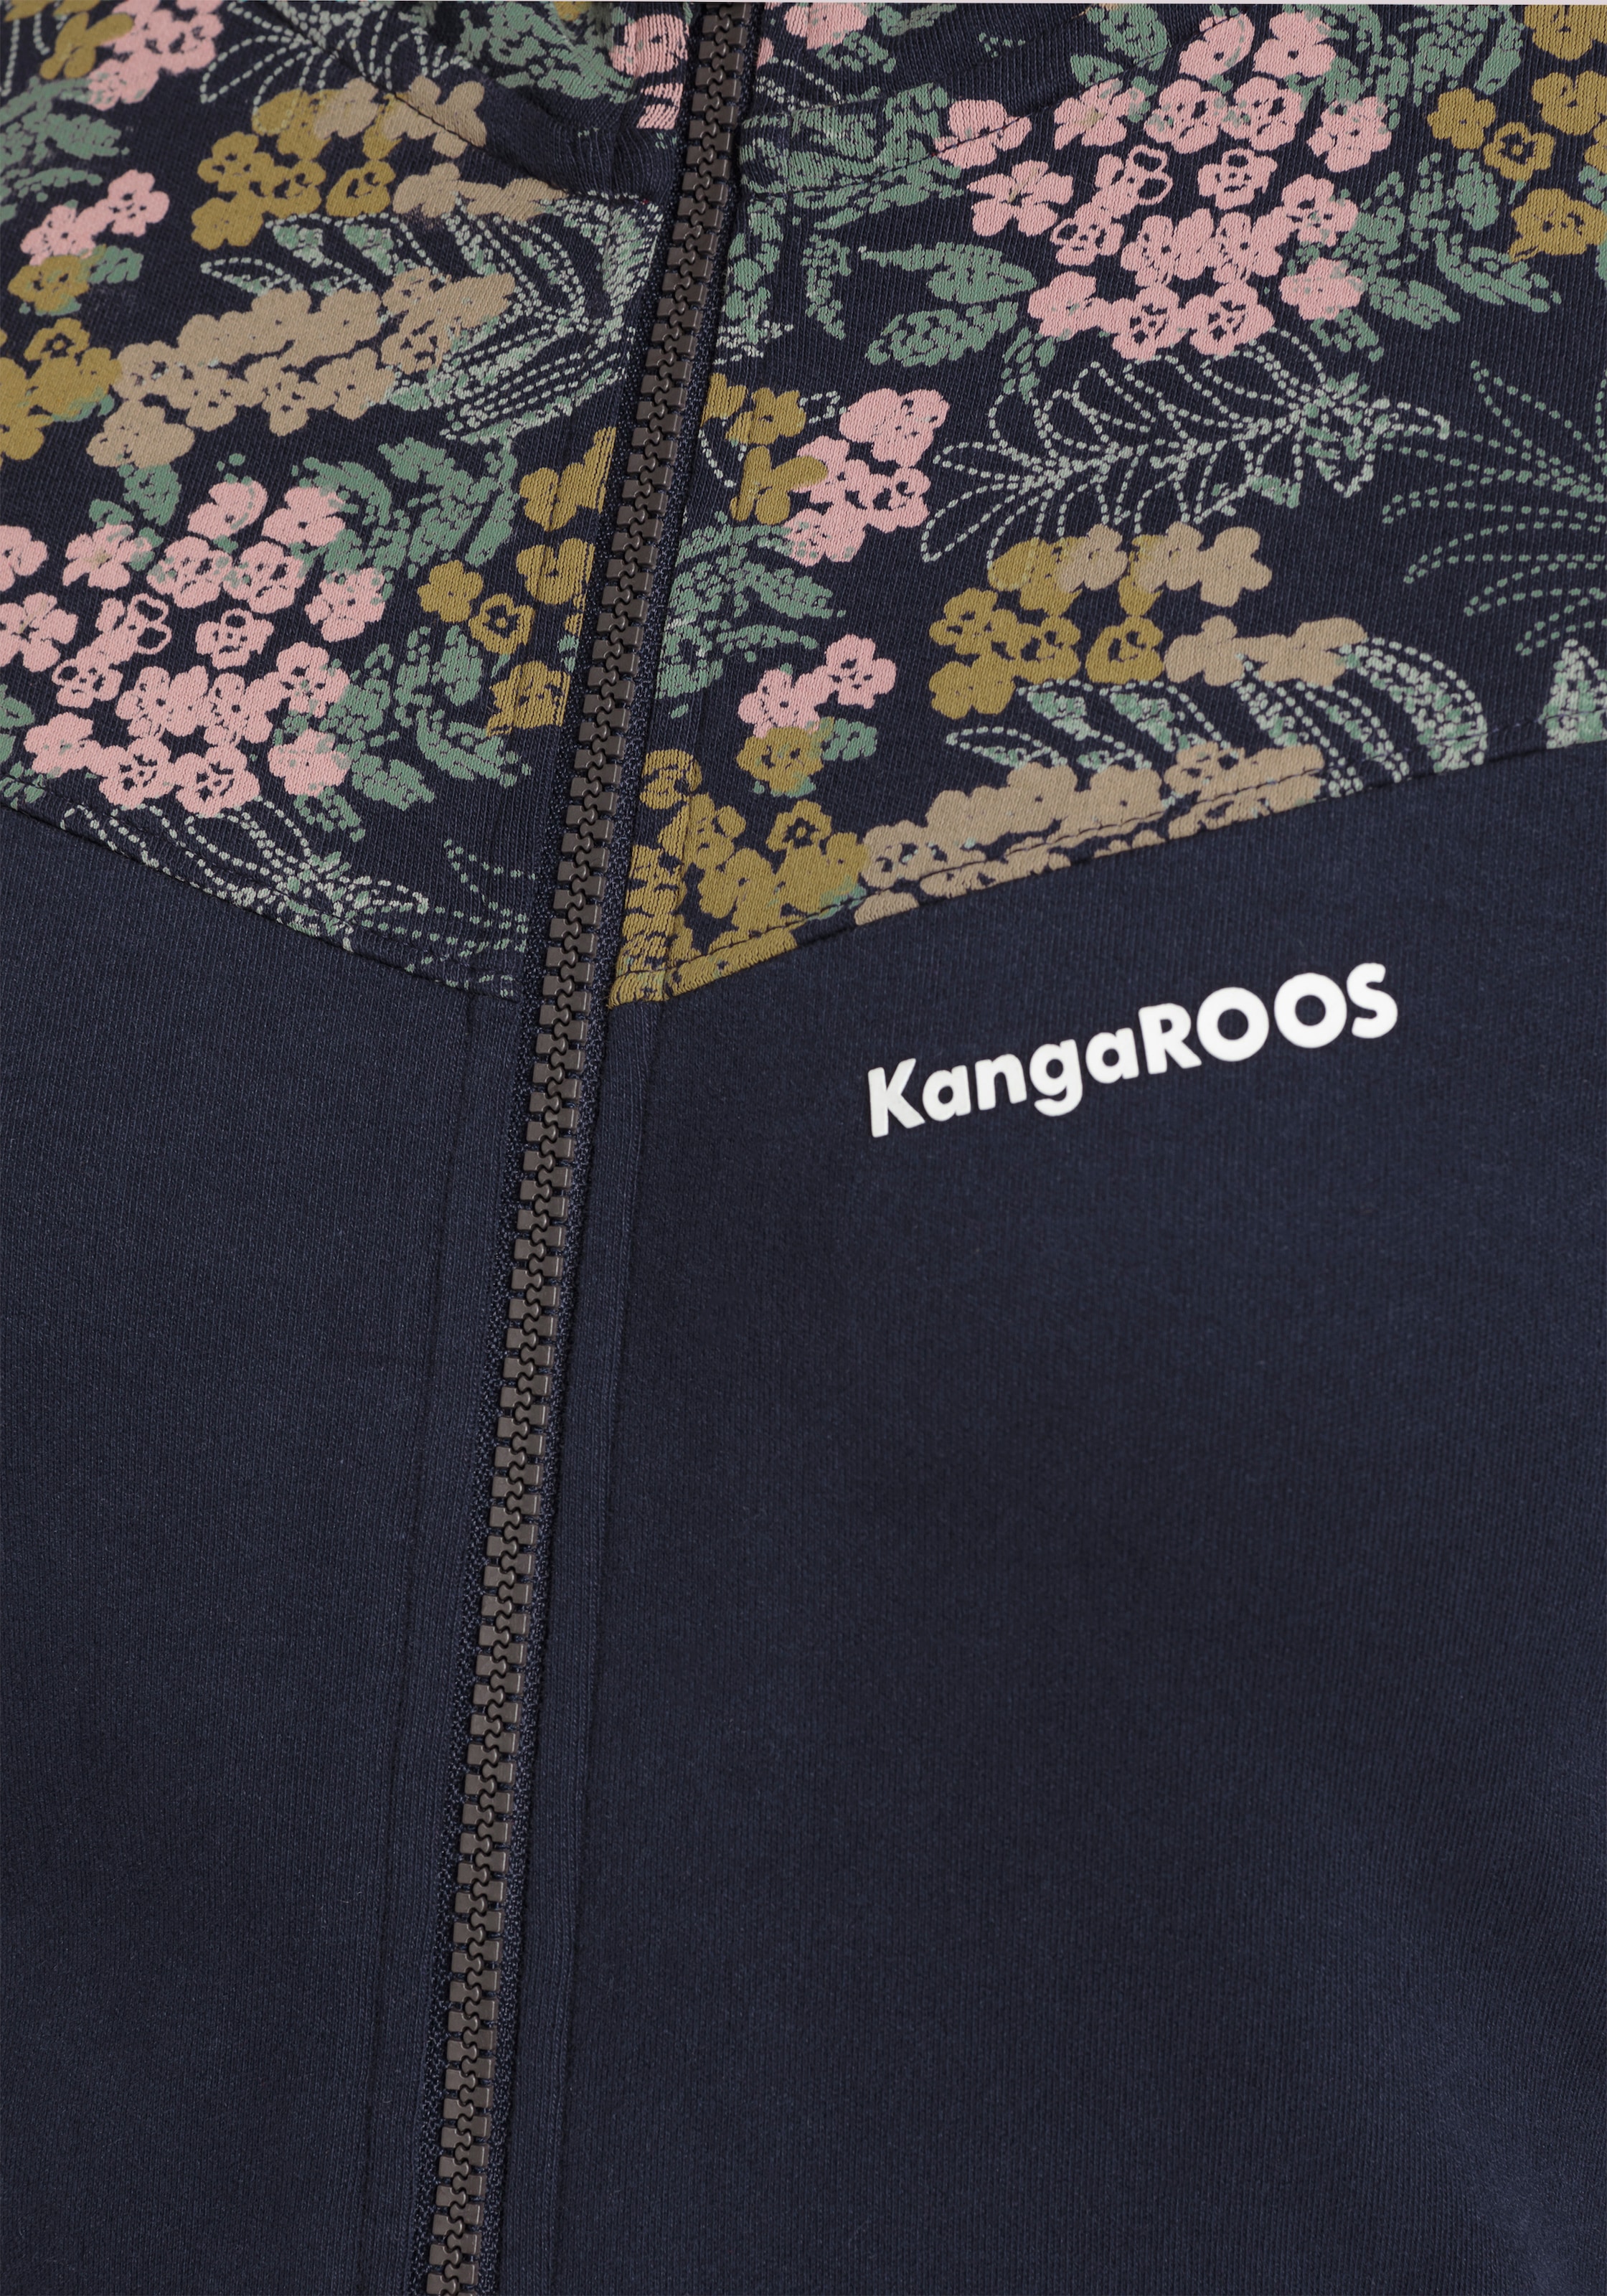 KangaROOS Kapuzensweatjacke, mit BAUR Alloverdruck-NEUE-KOLLEKTION Blumen | kaufen